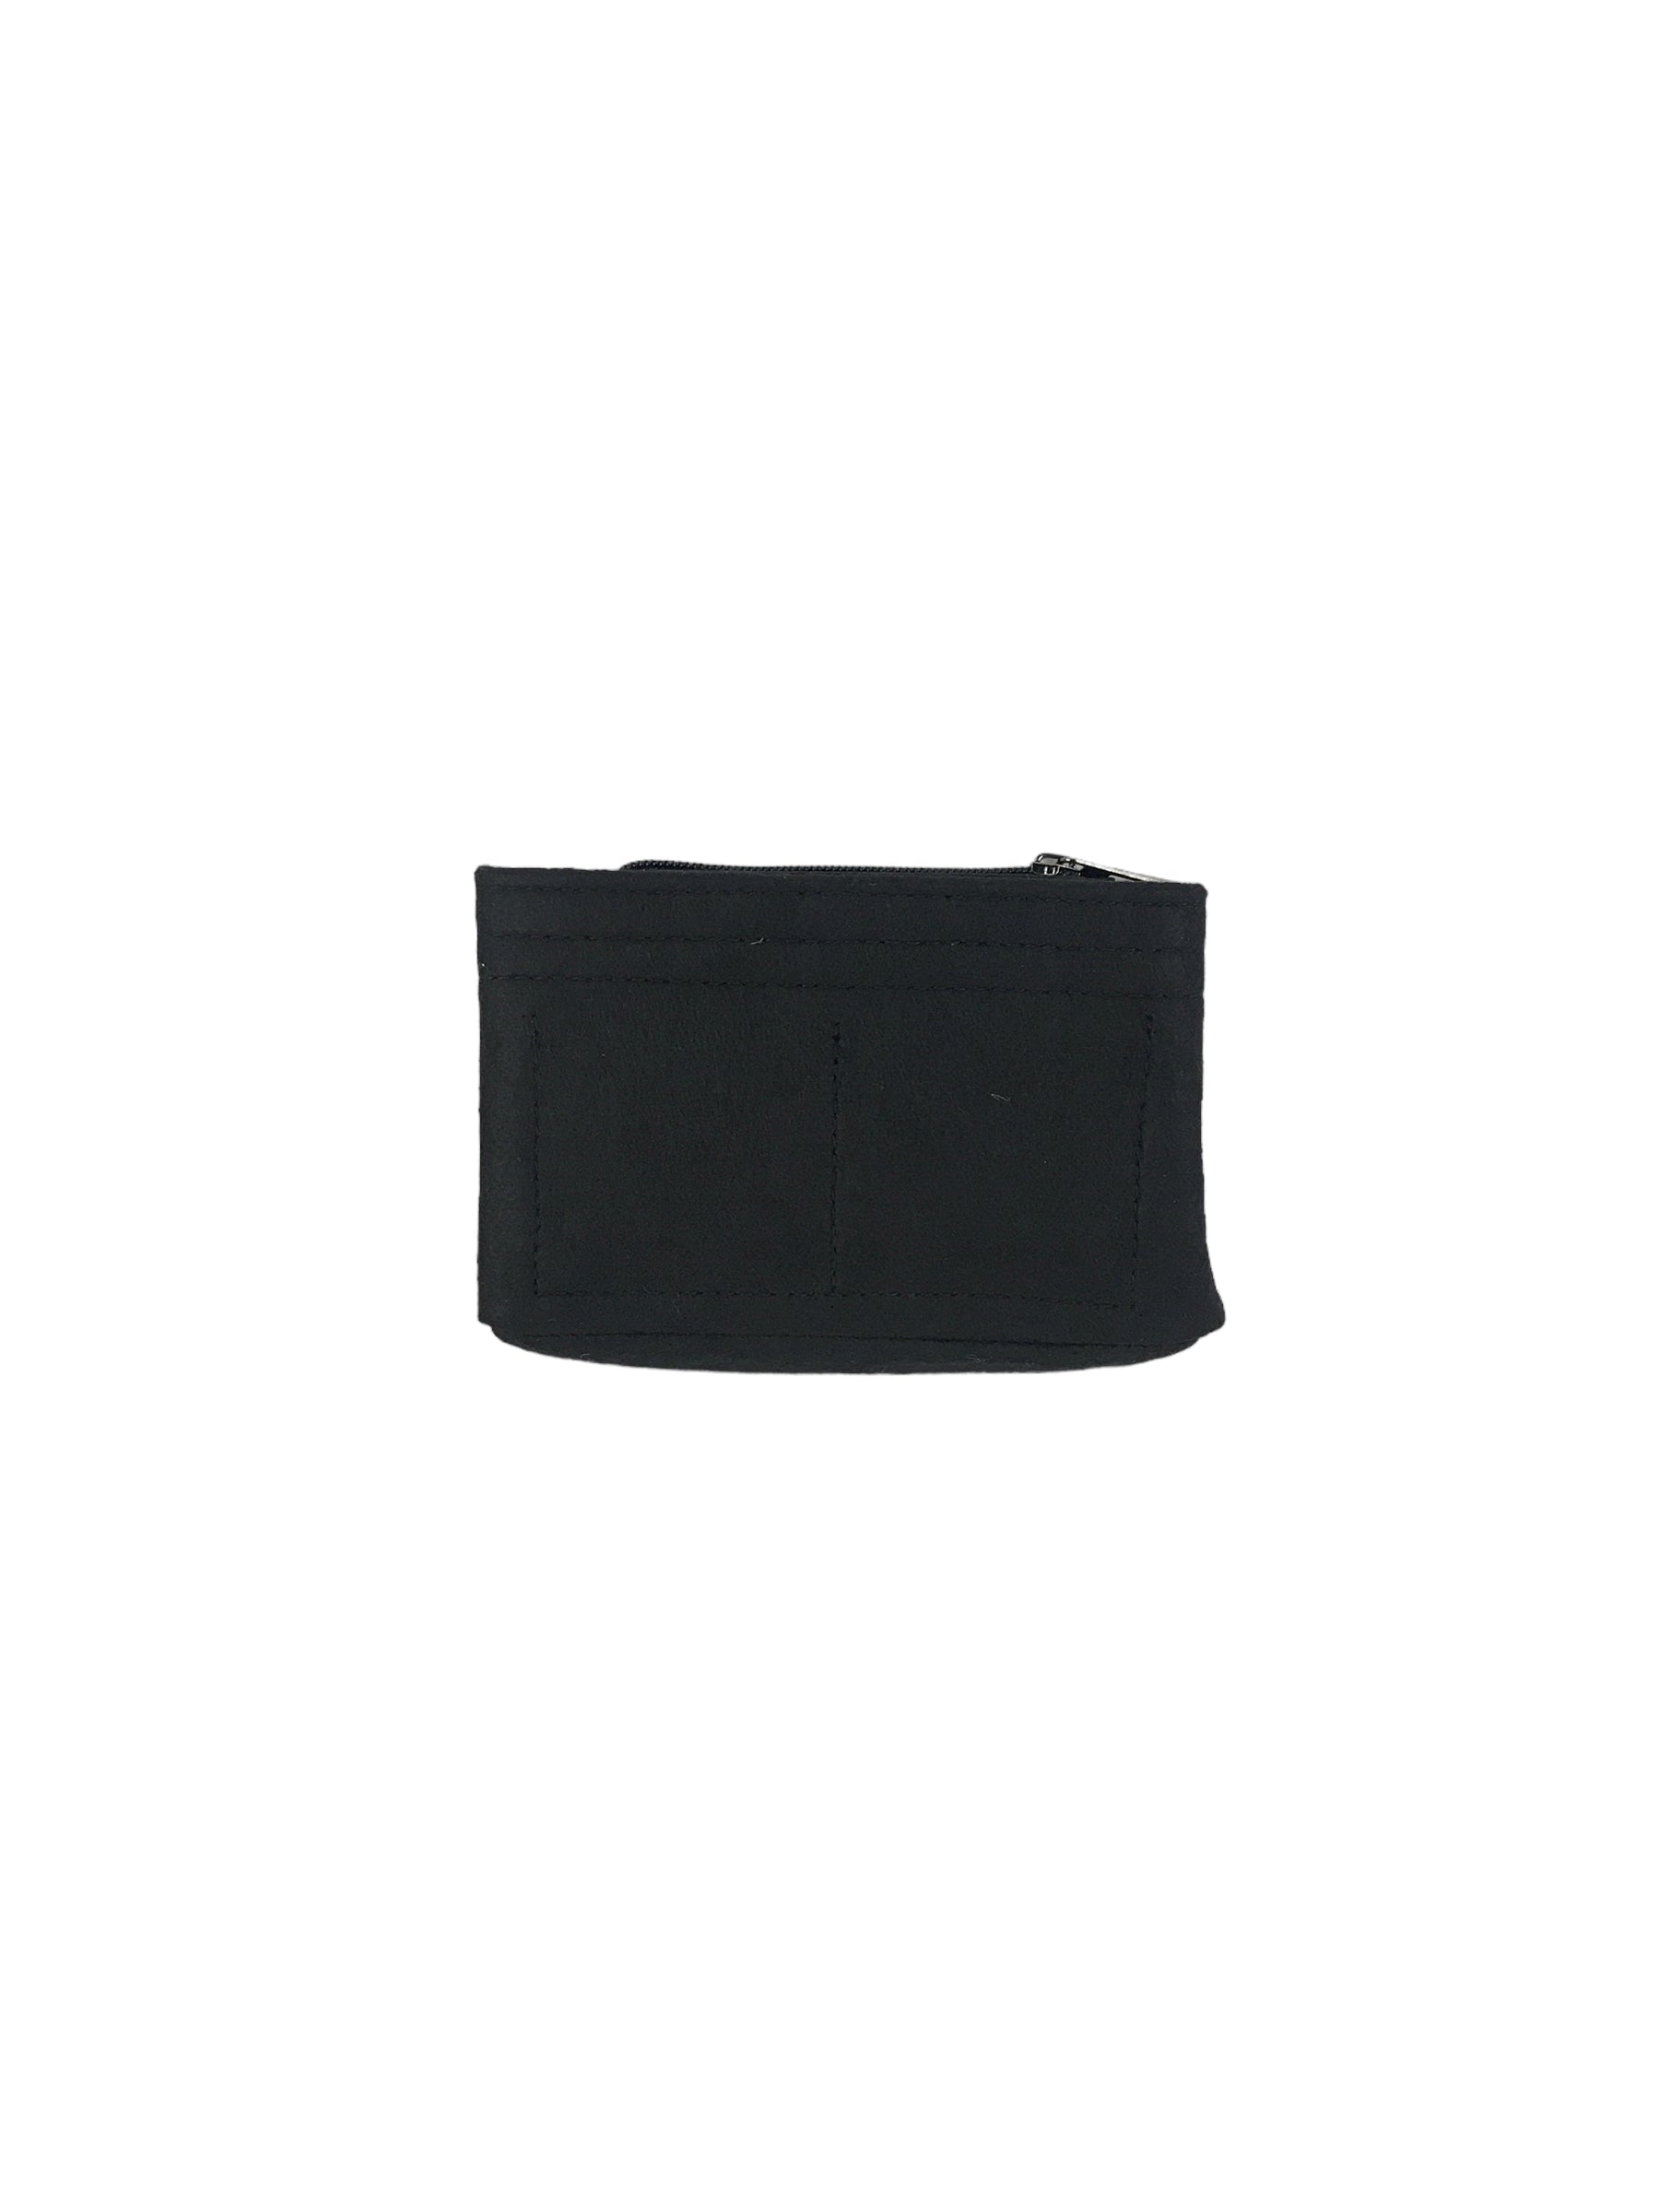 Black Chanel Square Mini Felt Bag Insert/Organizer